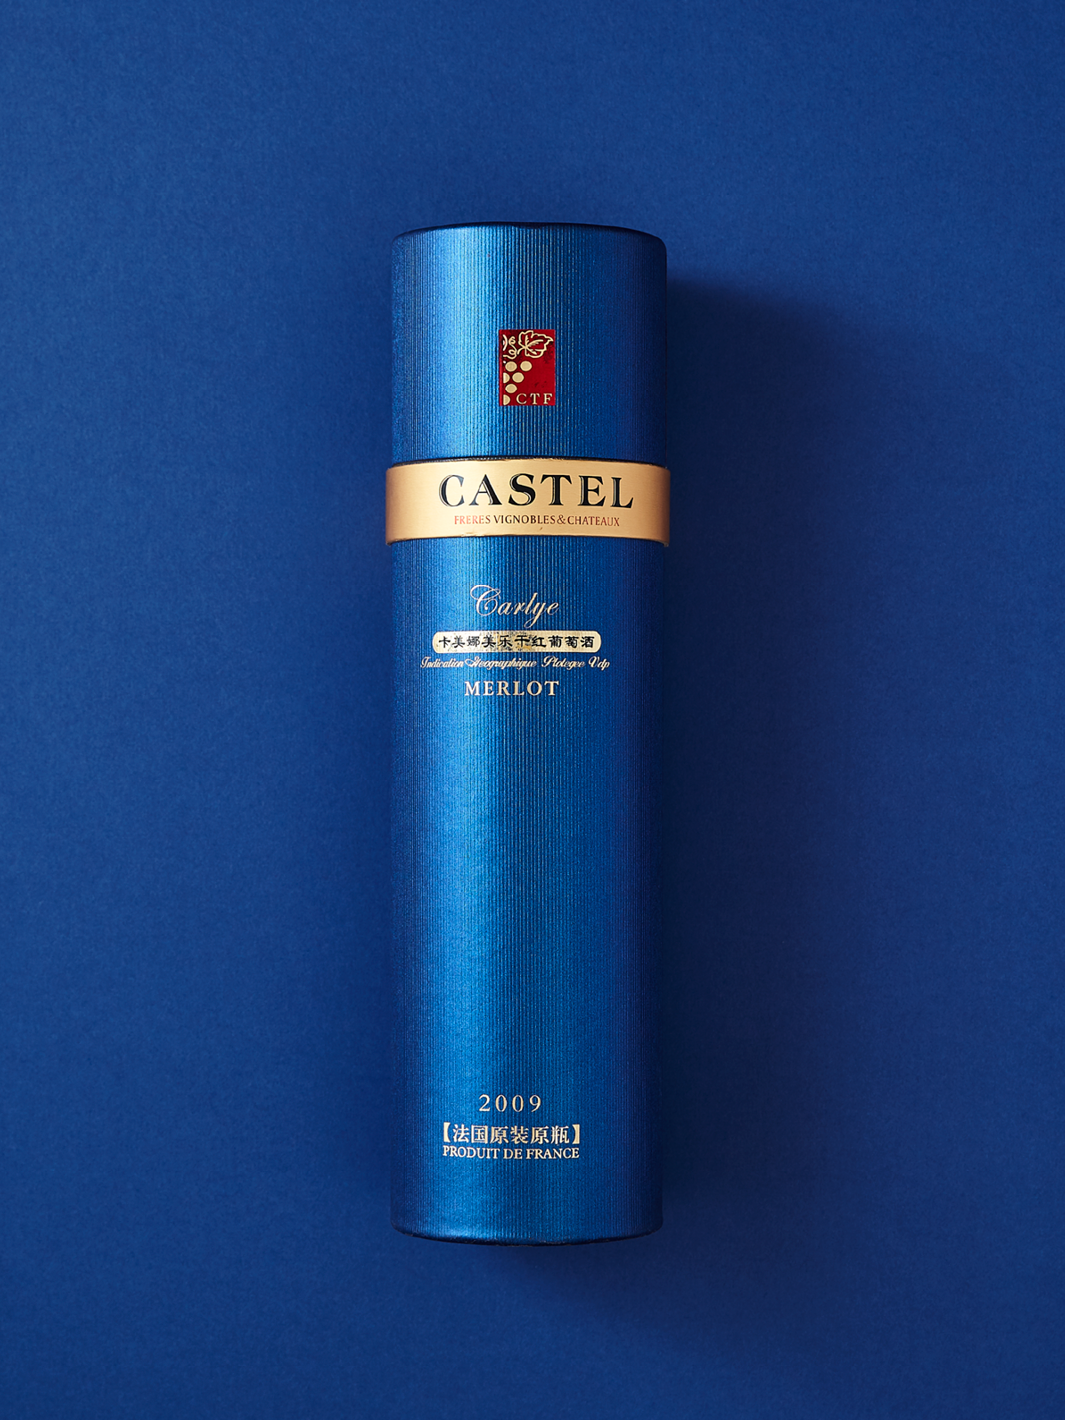 Tubo in cartone blu per bevande Castel.